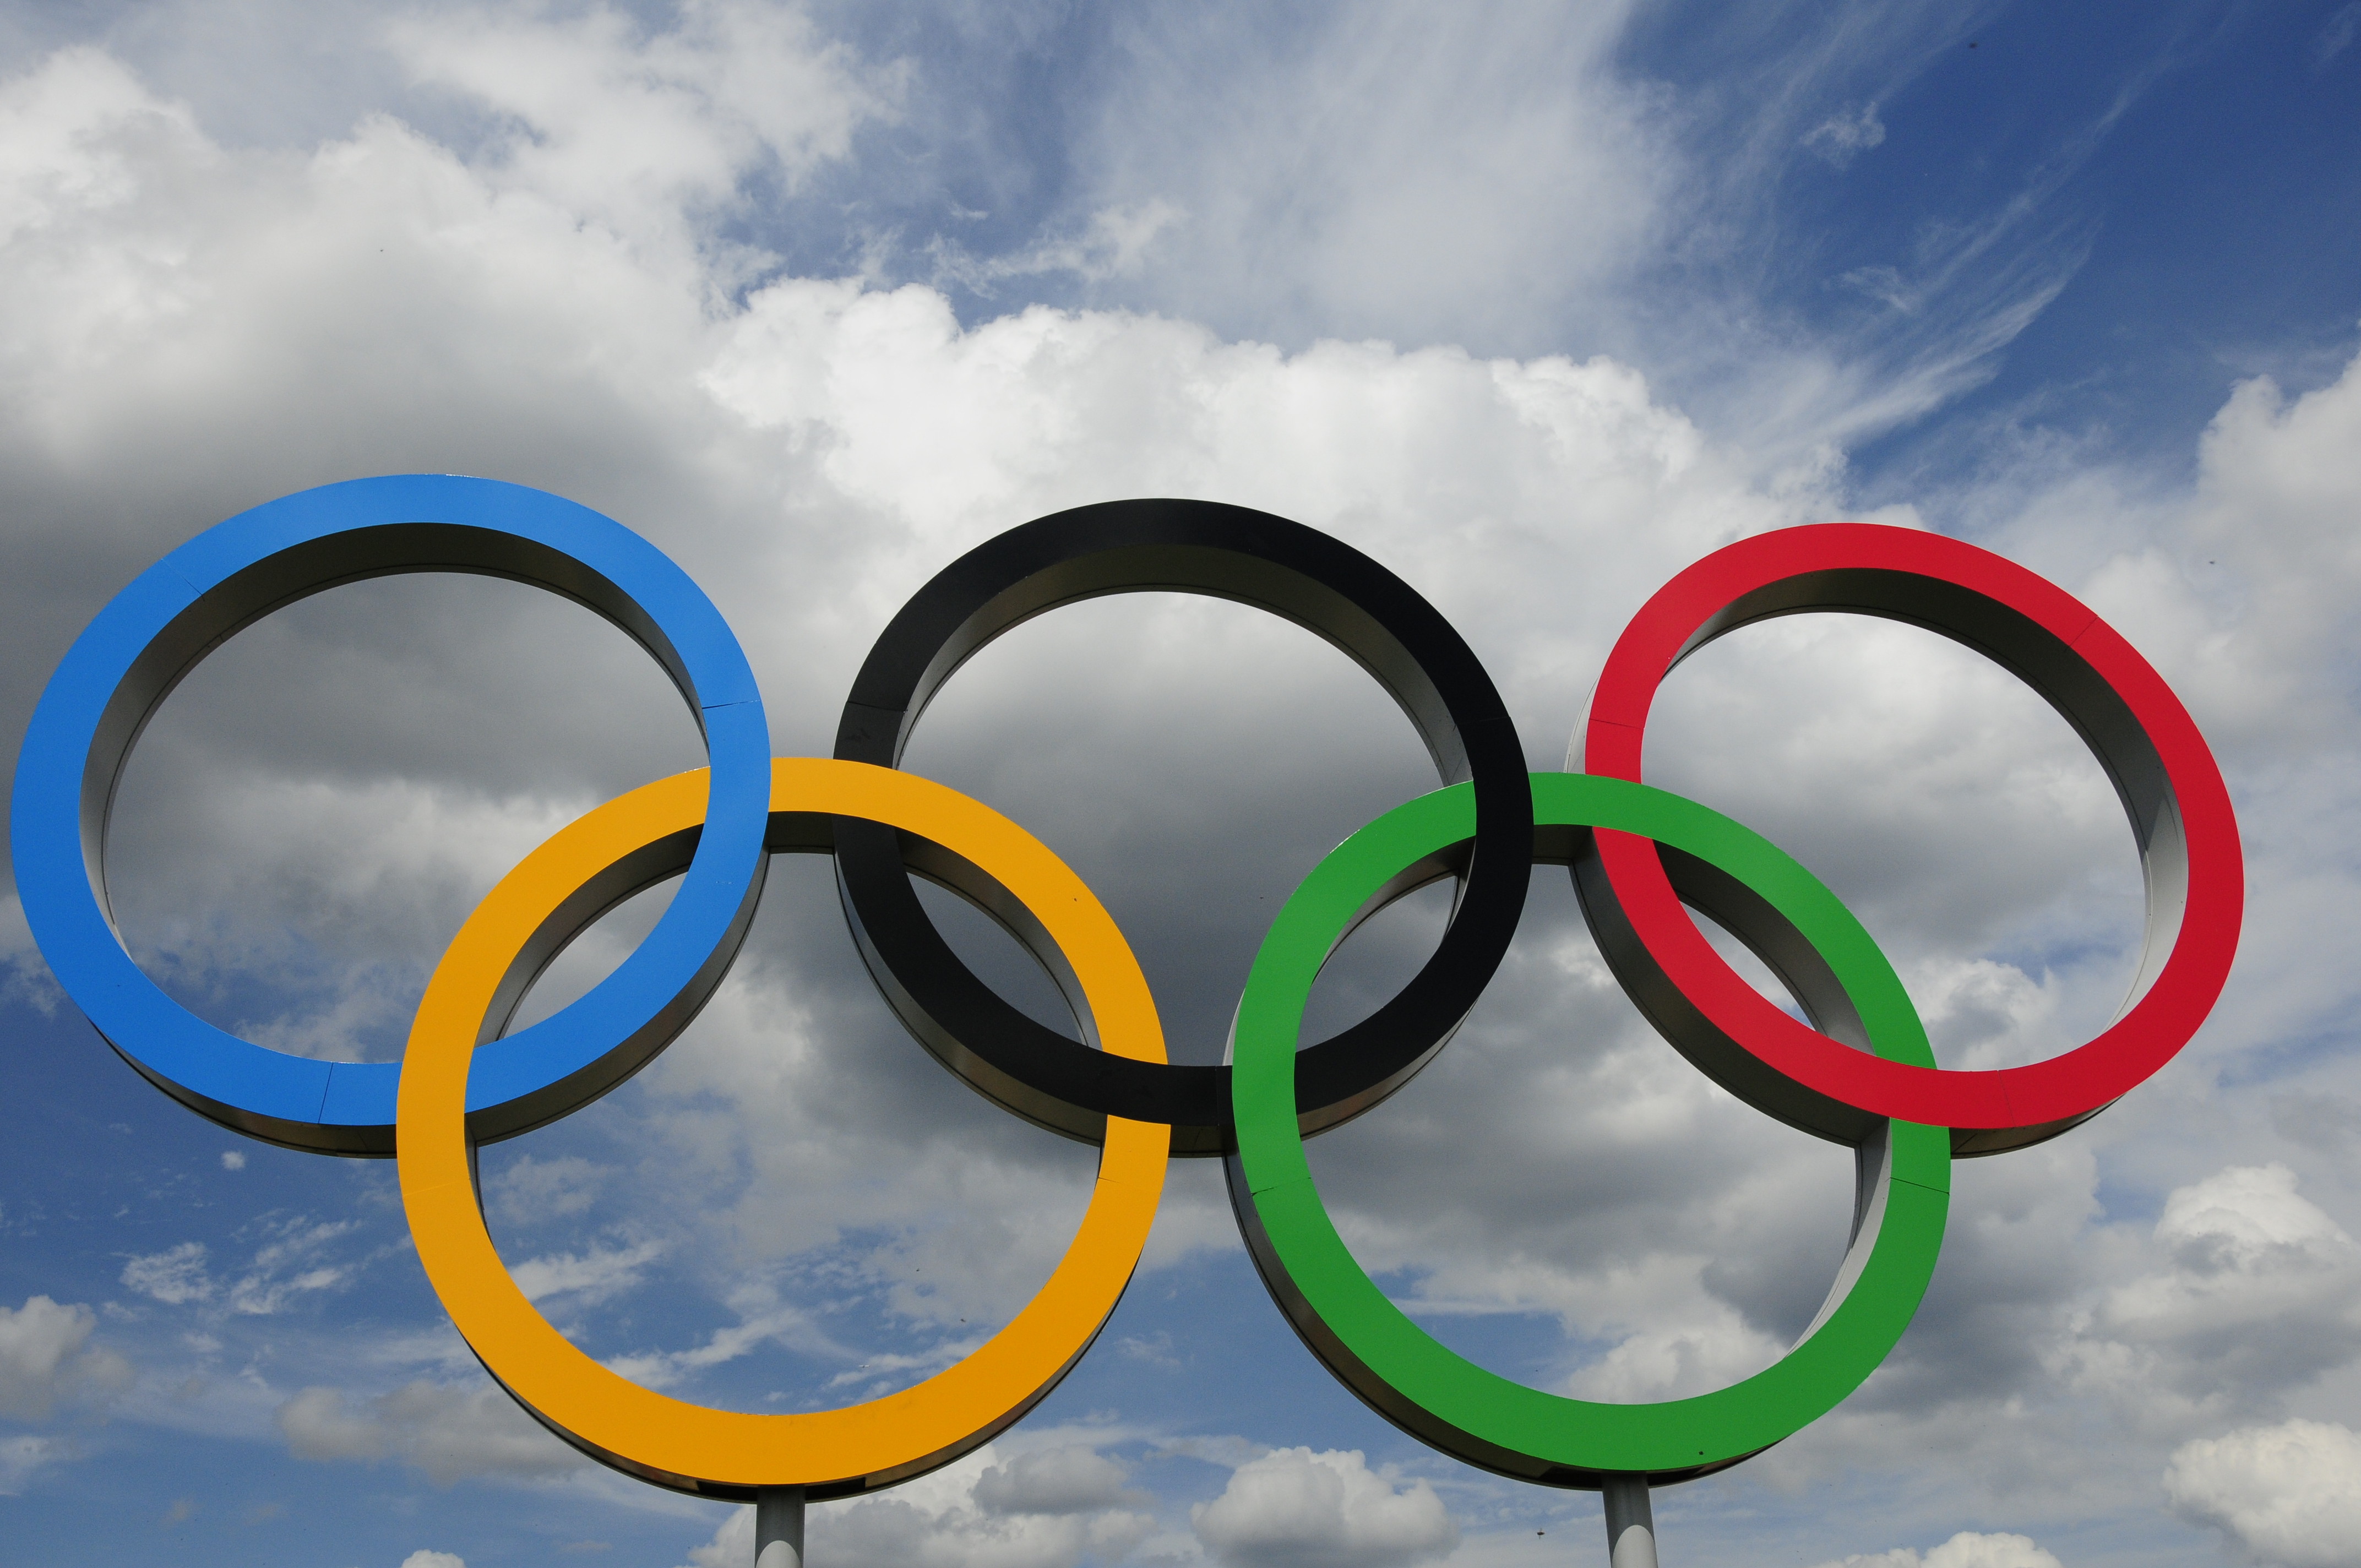 Олимпийские кольца.Фото:&copy;Flickr/The Department for Digital